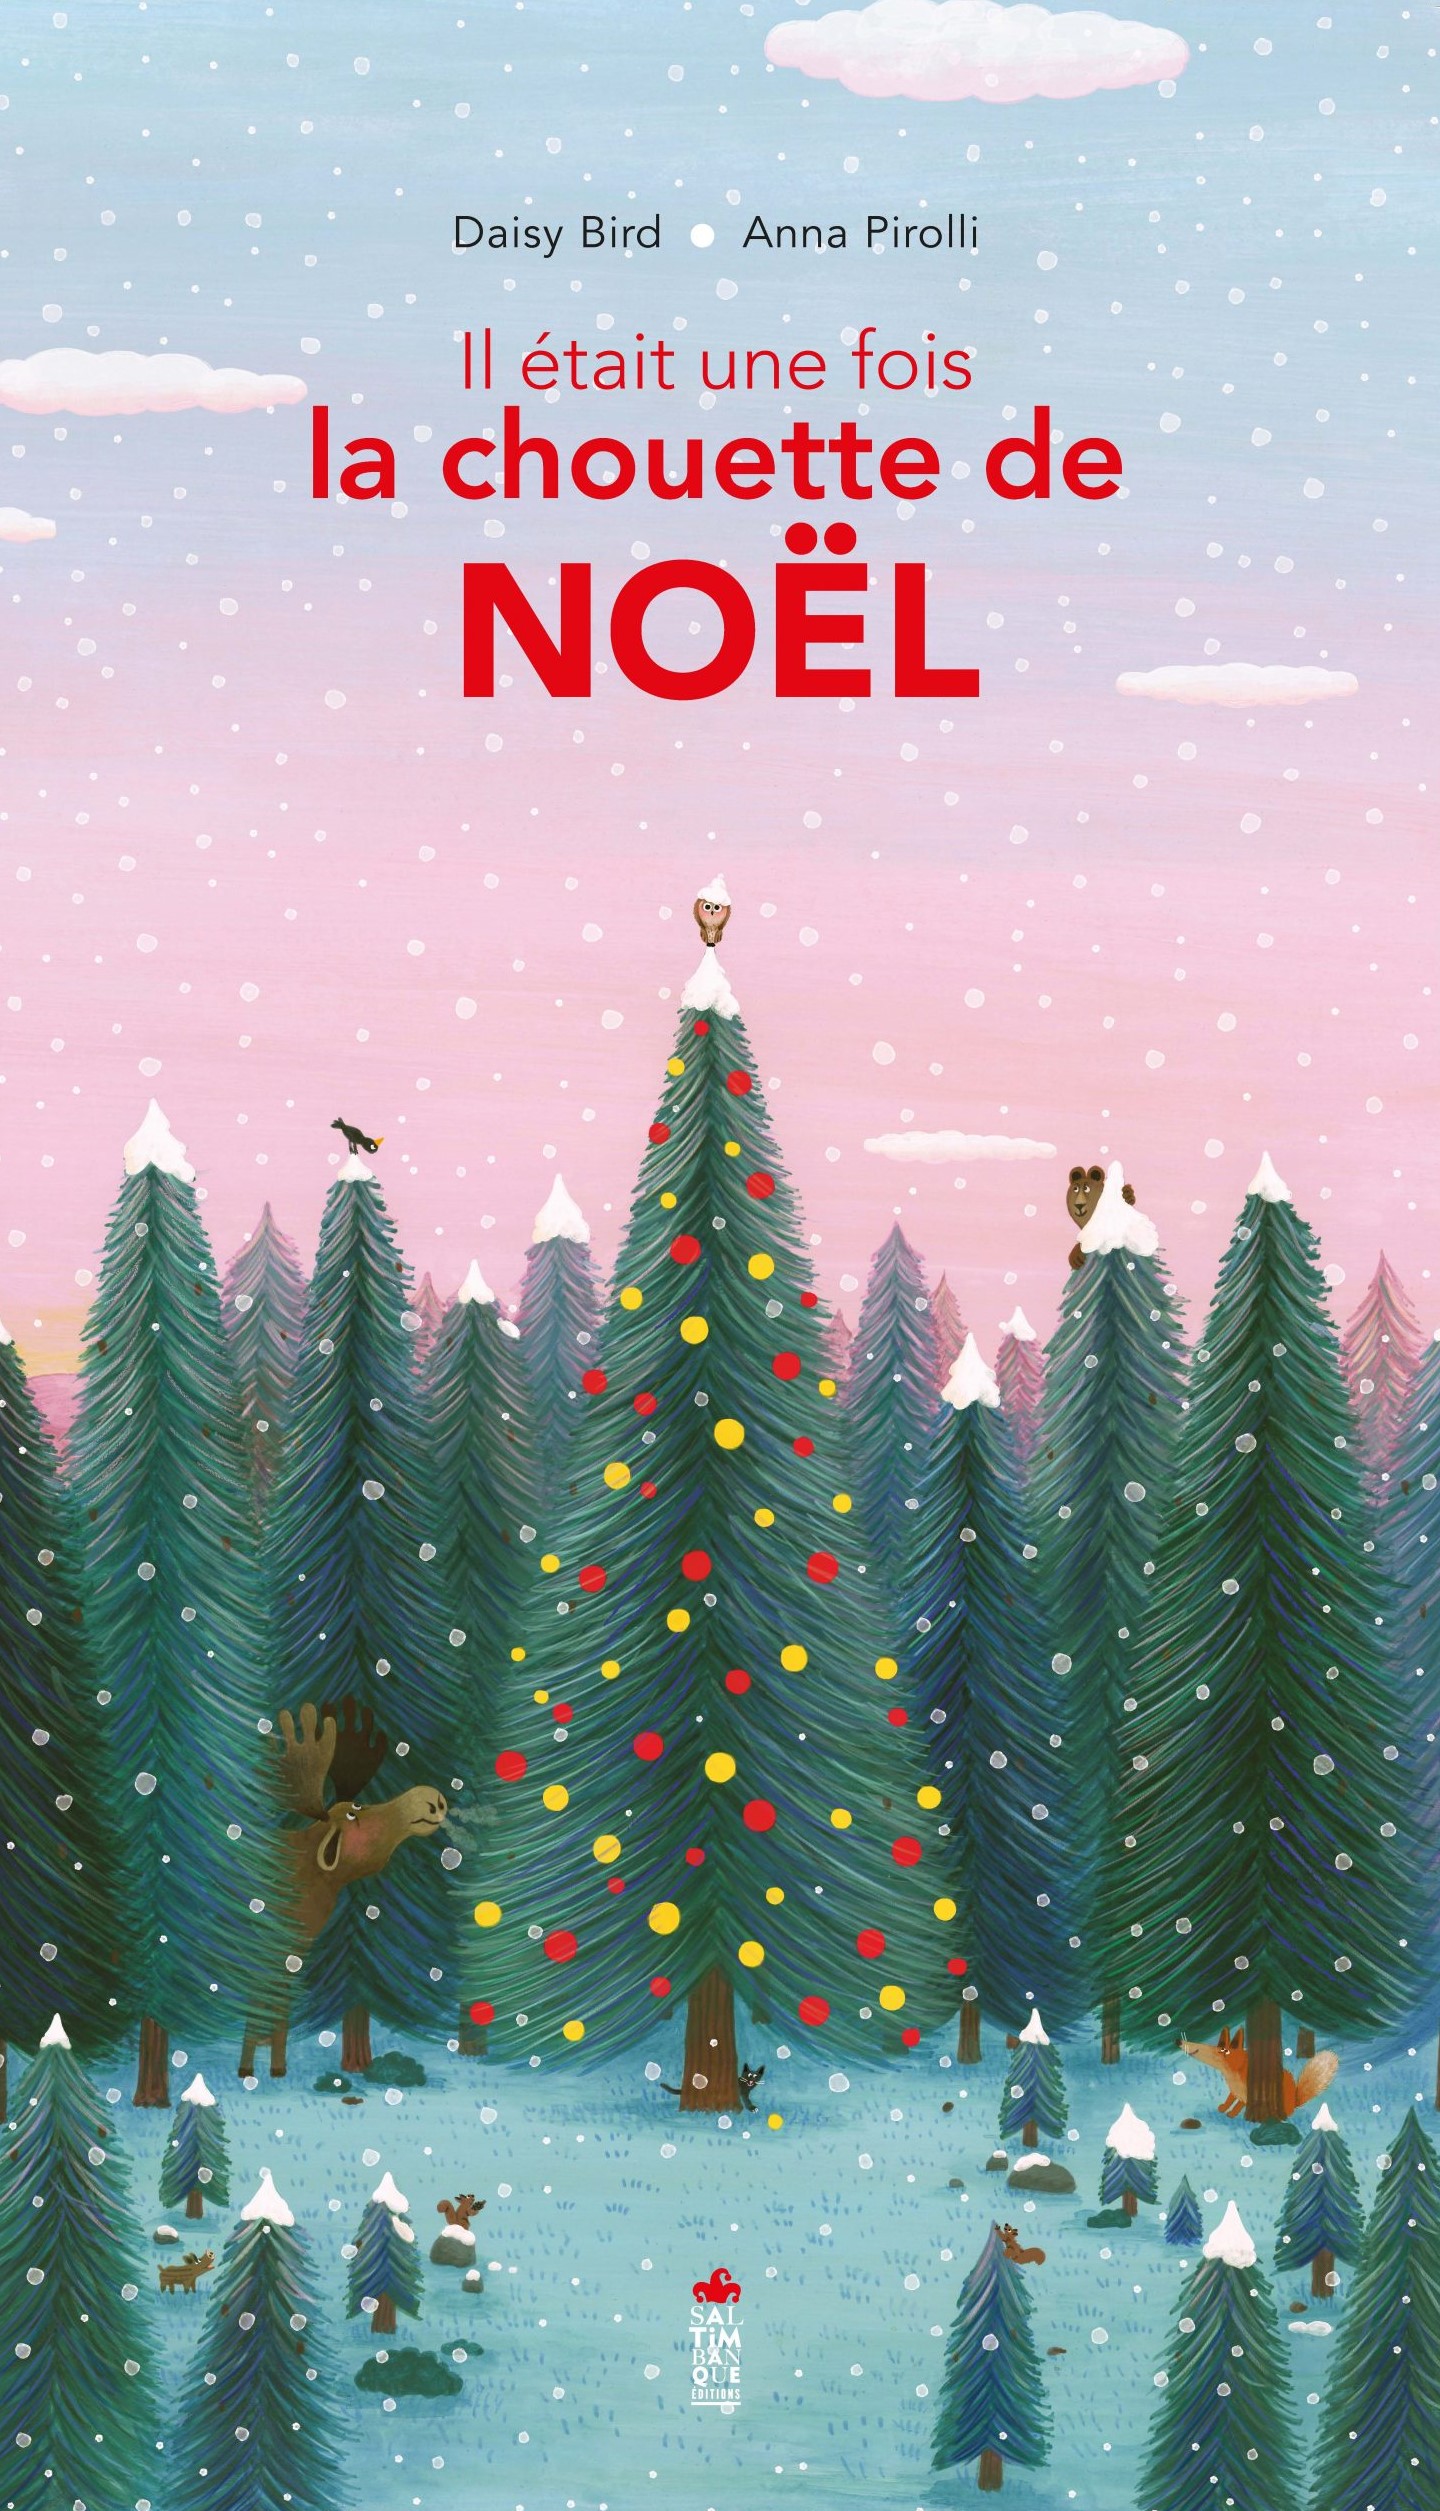 Jazz d'arbre de Noël illustration stock. Illustration du beau